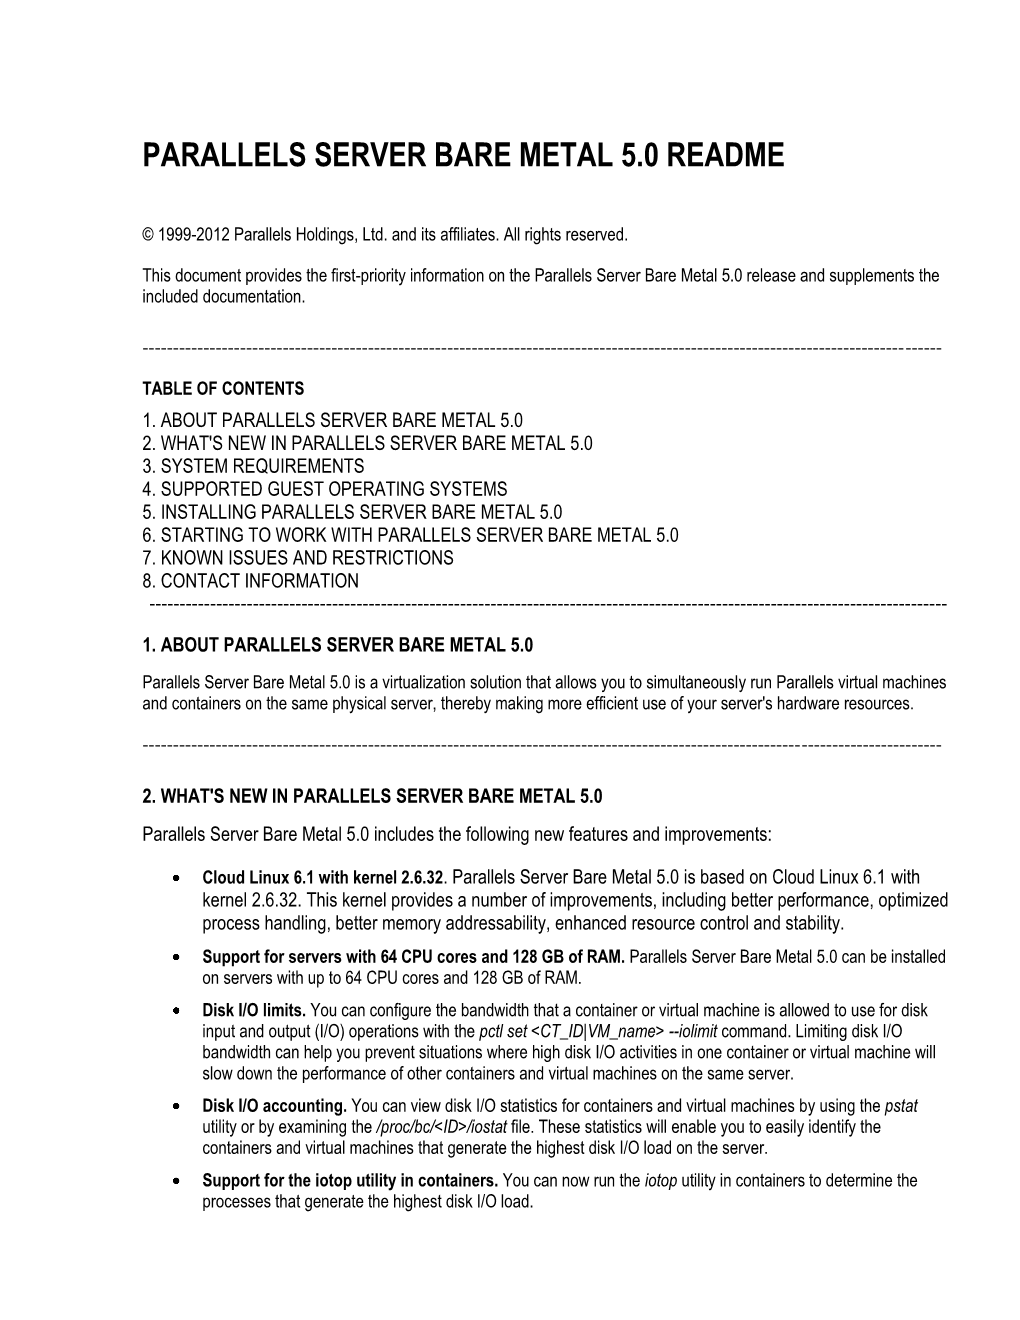 Parallels Server Bare Metal 5.0 Readme